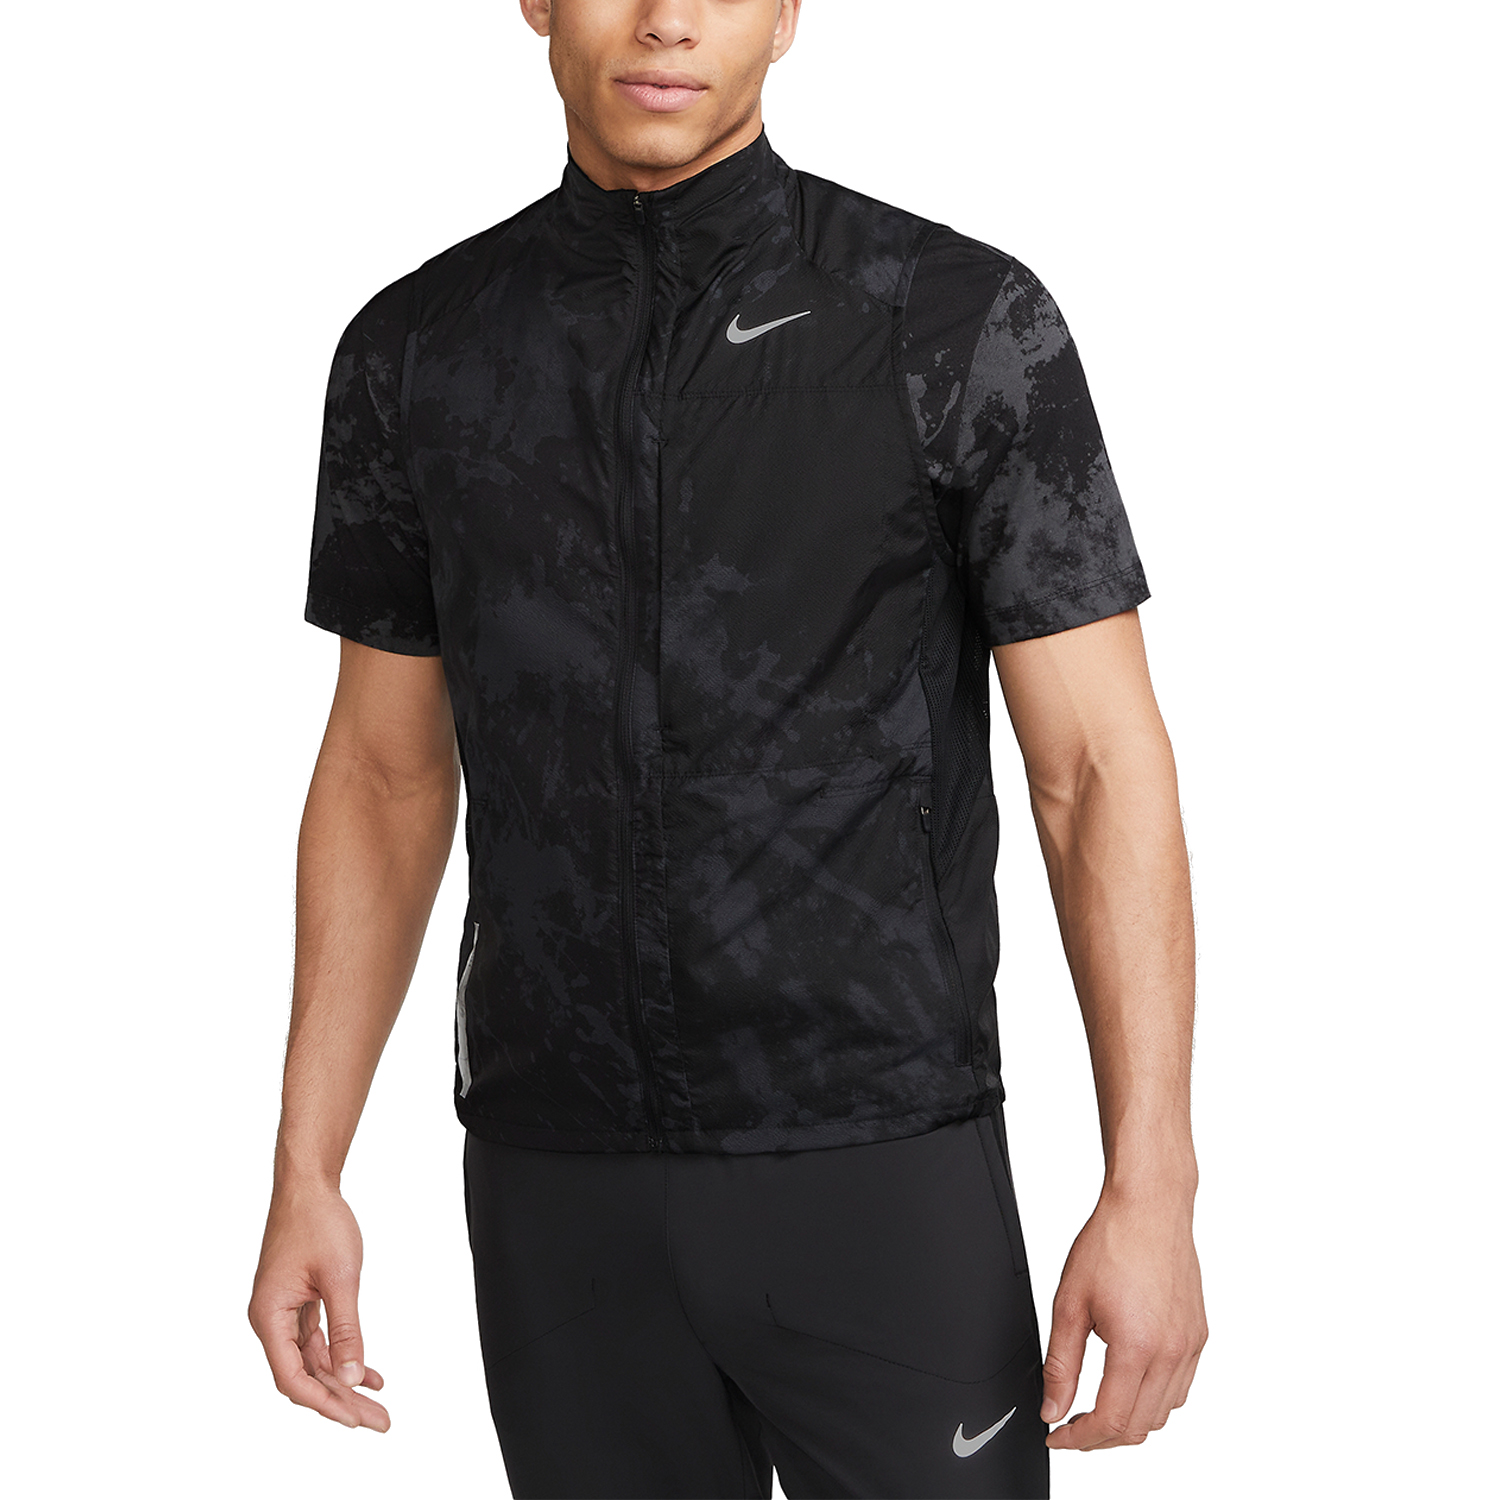 Nike Repel Run Division Men's Running Vest - Black